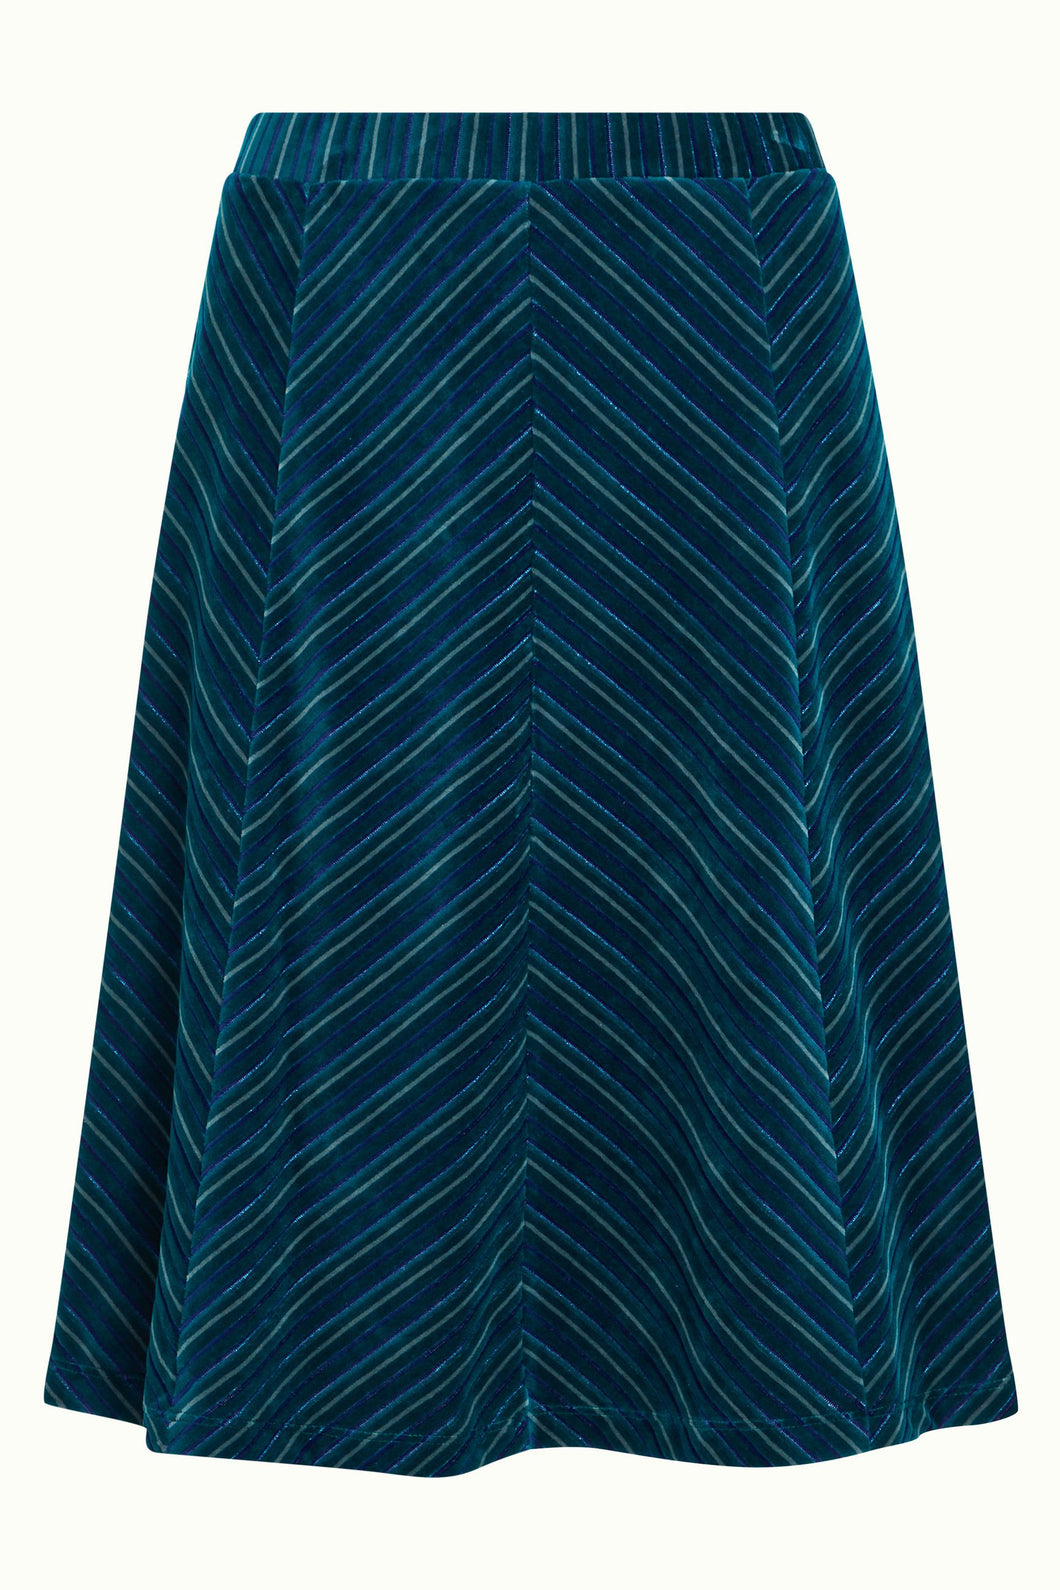 Rock King Louie, Style: Juno Skirt Moda Stripe, Farbe: 305 – Lapis Blue, *New in*